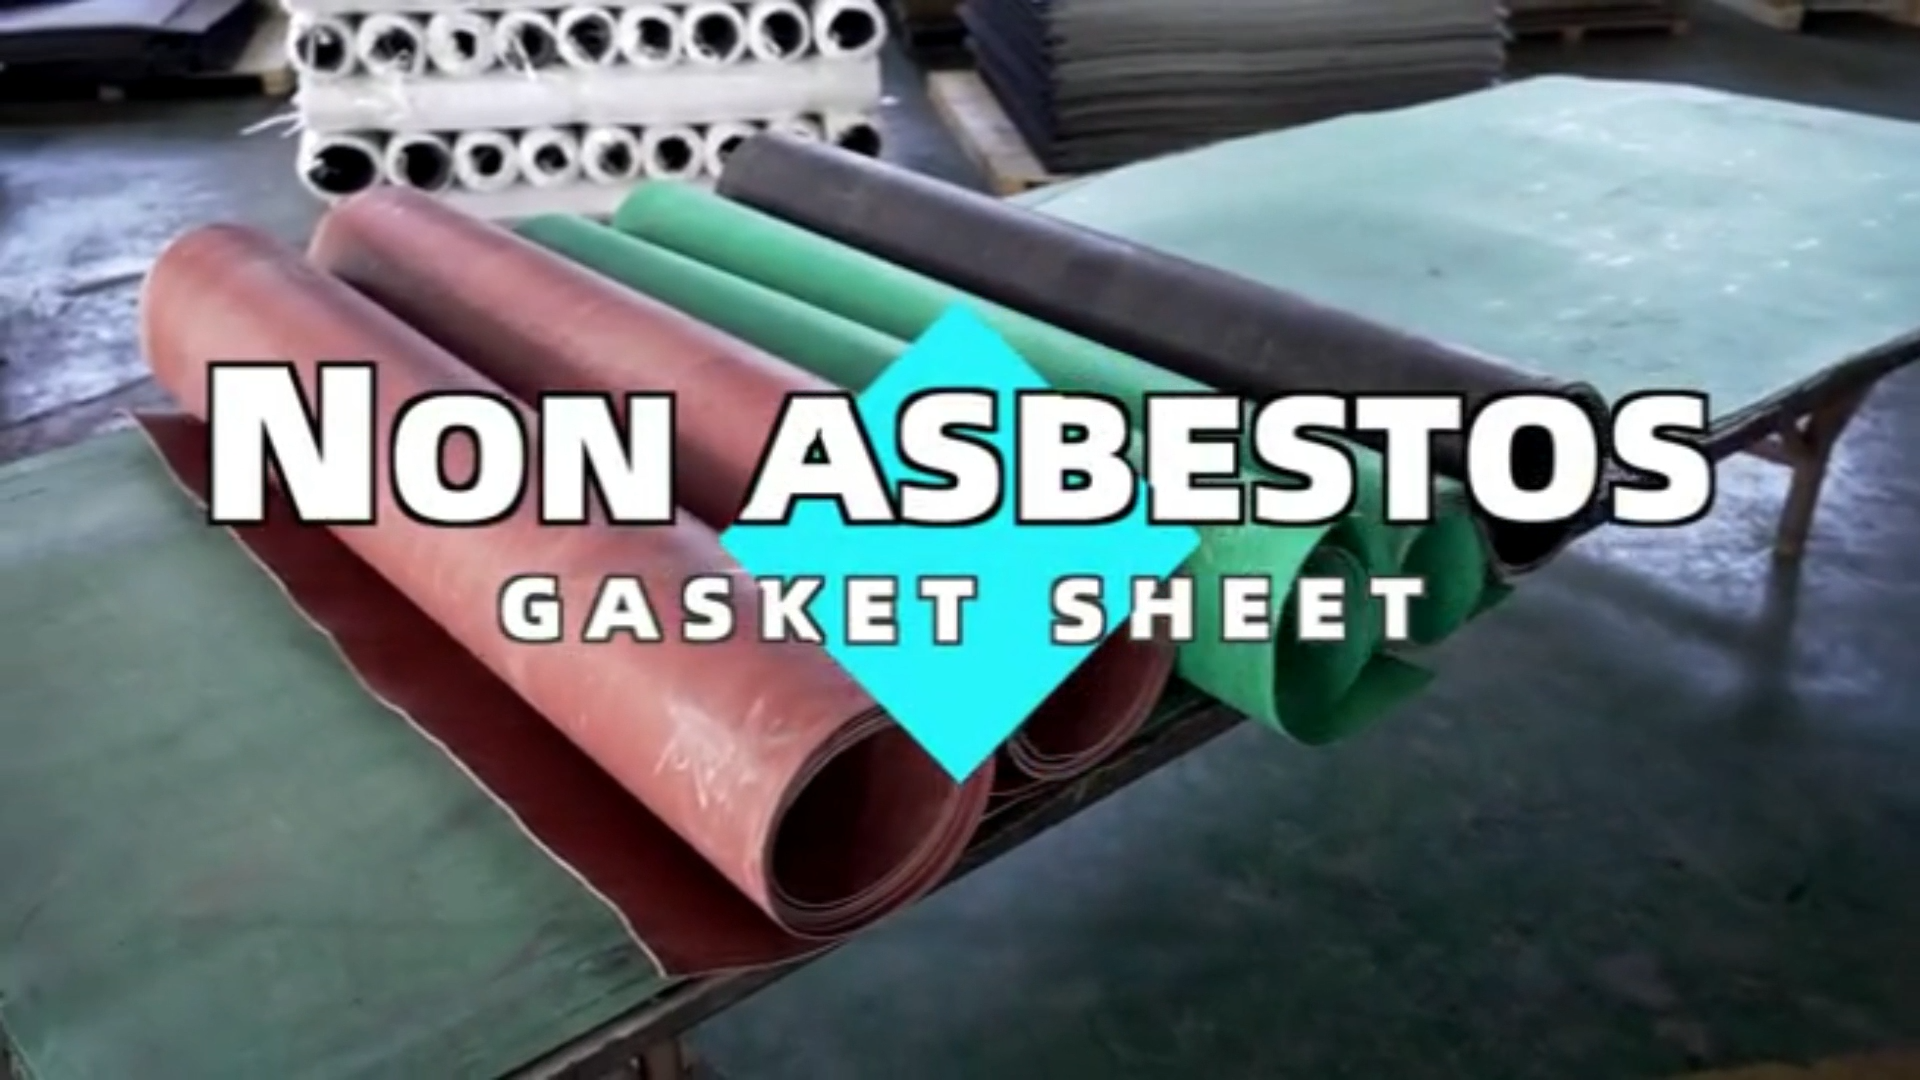 Green non asbestos rubber sealing gasket sheet1